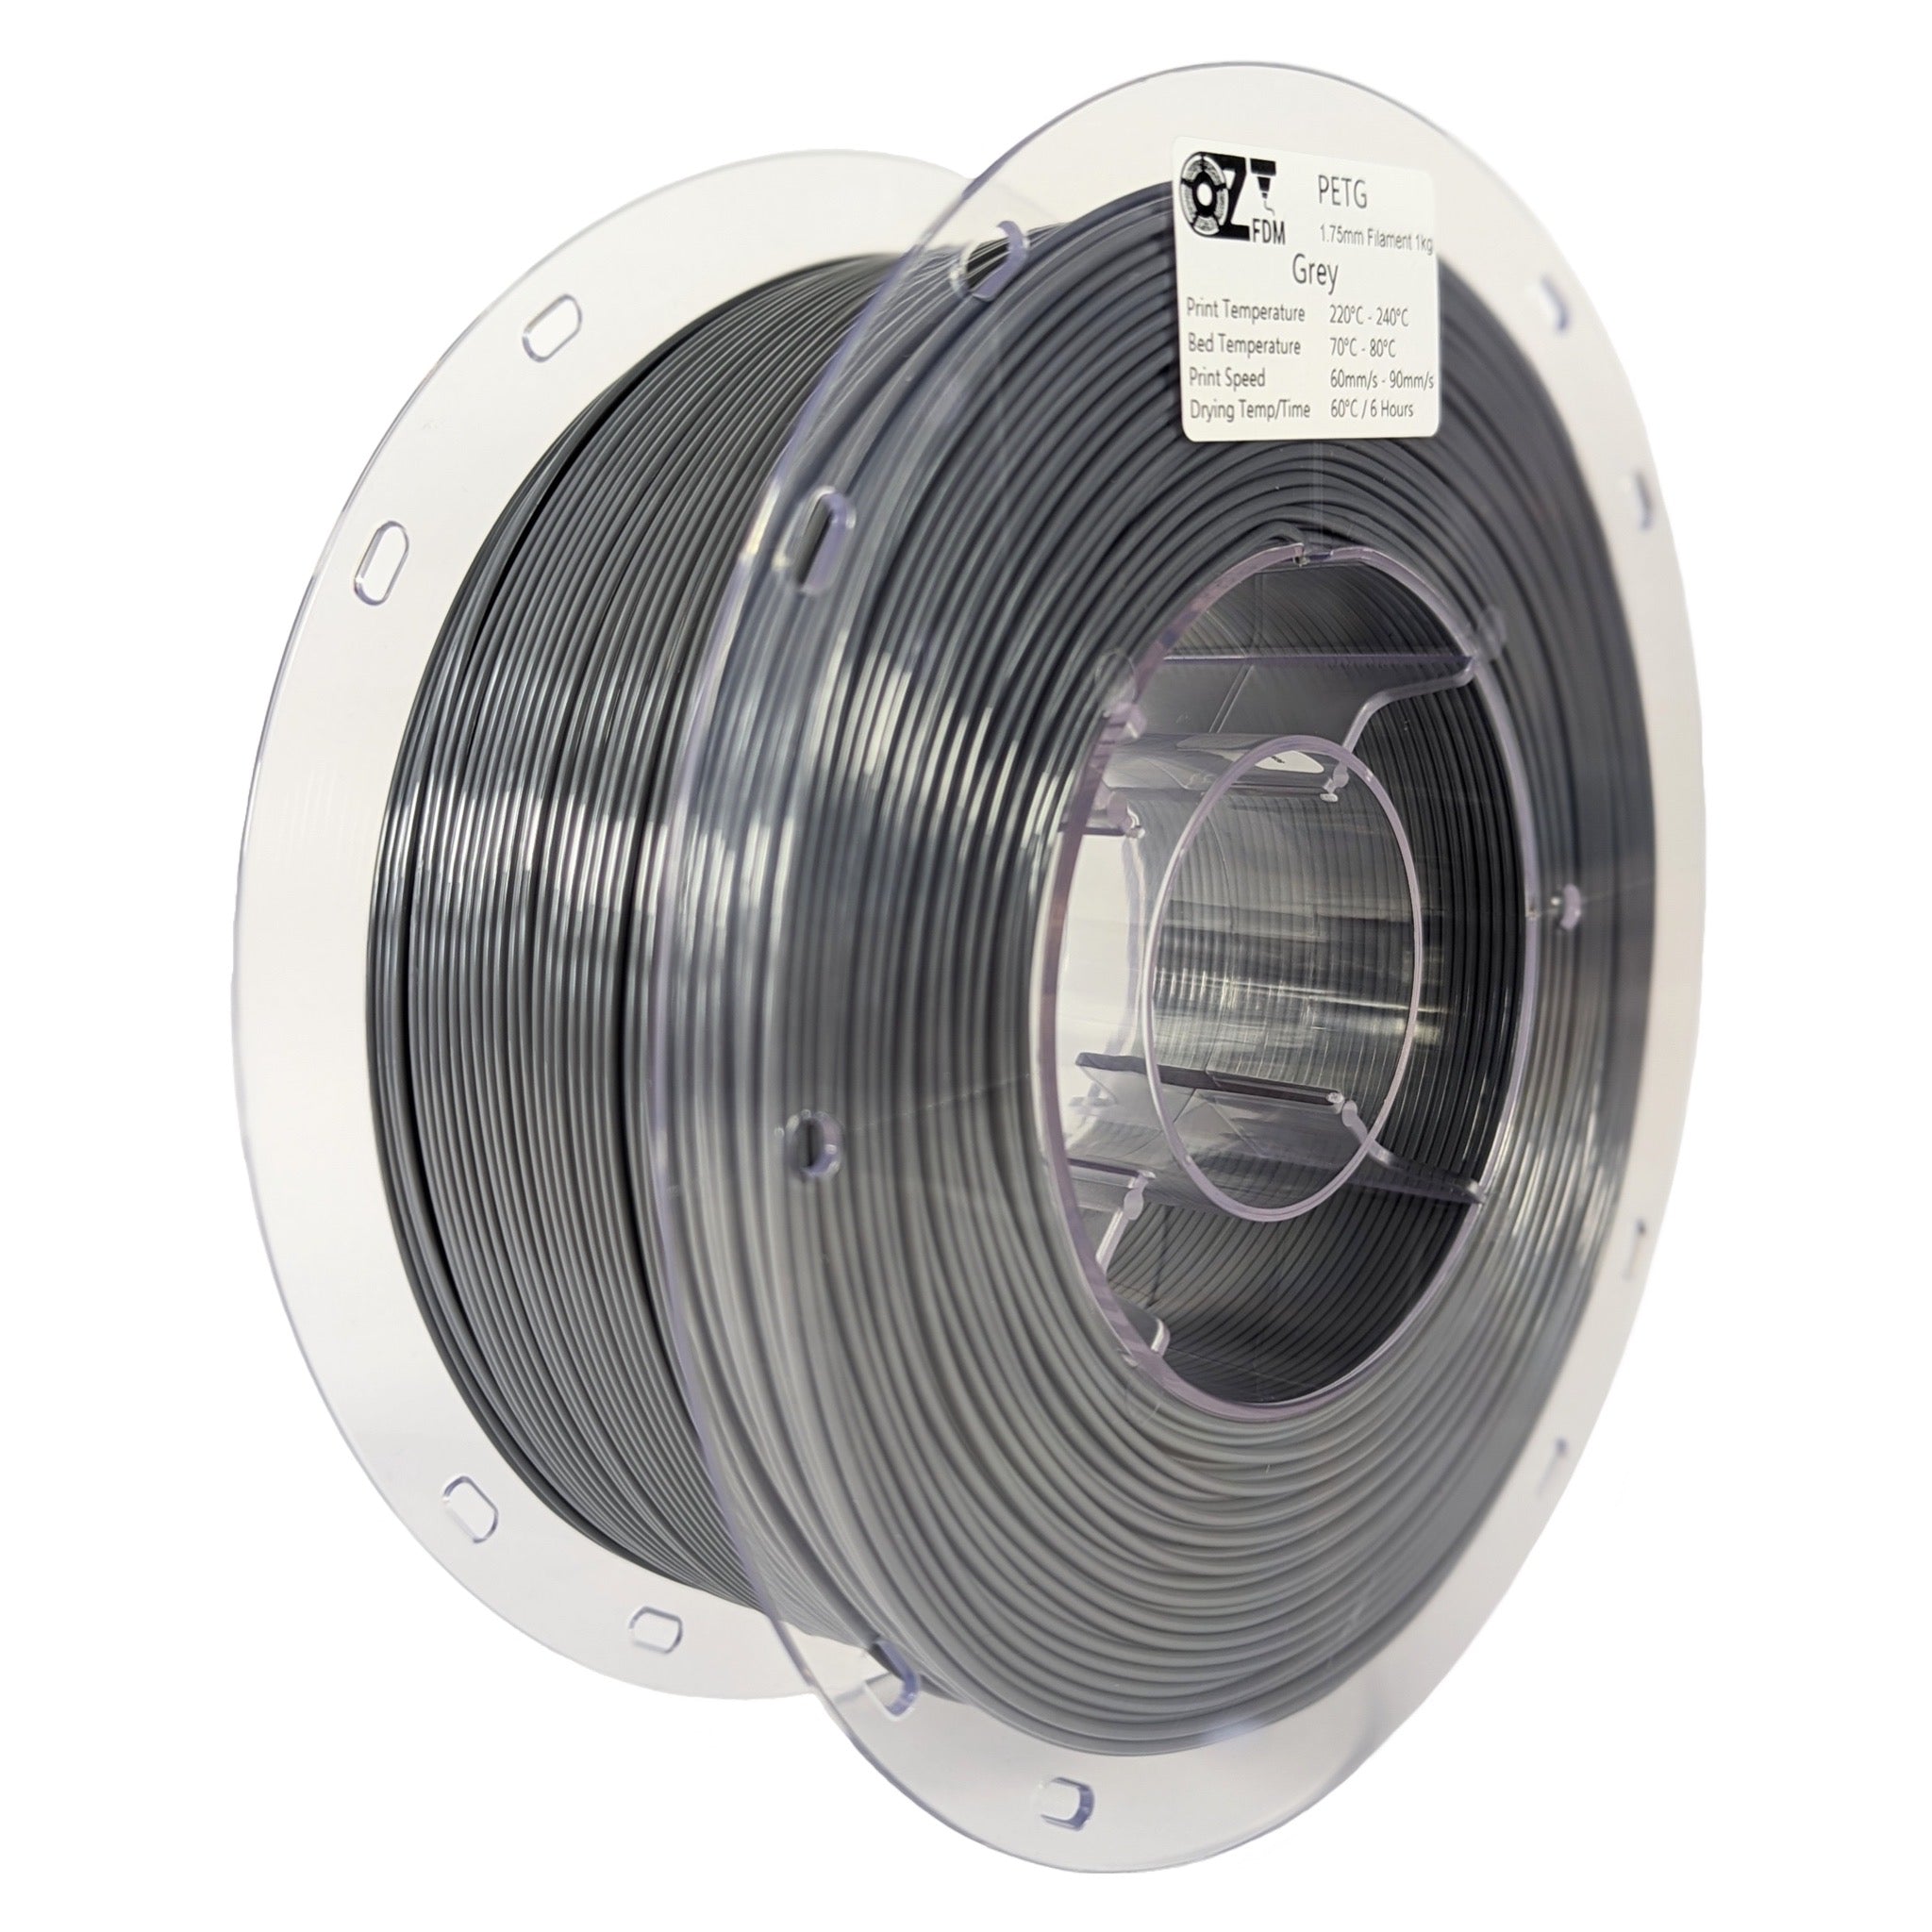 Transparent PETG Filament - 1.75 mm (1KG)